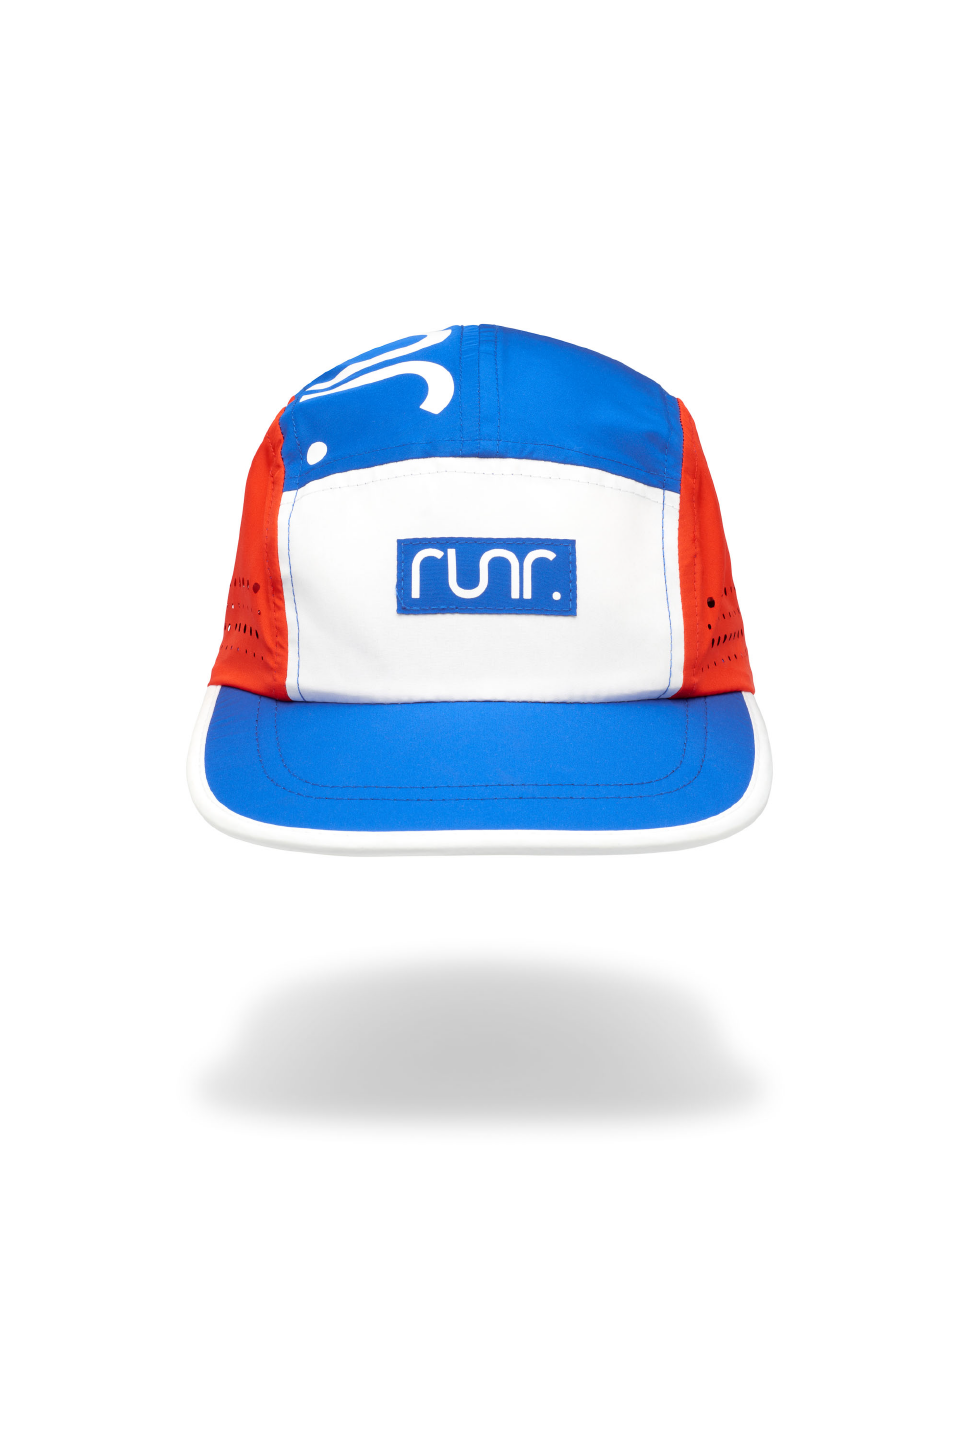 Runr Melbourne Technical Running Hat